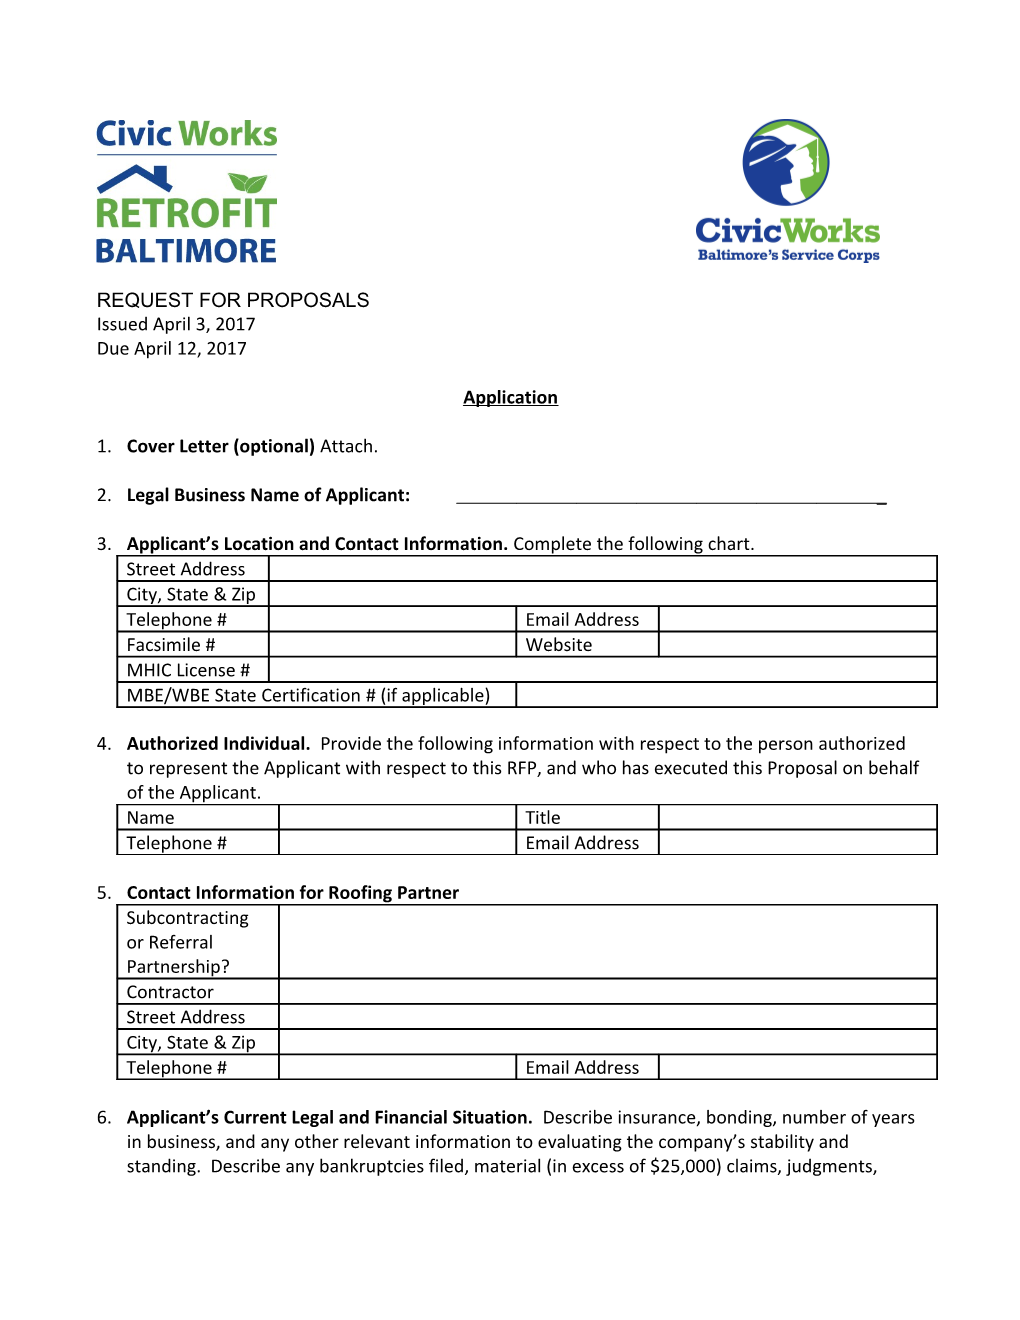 Civic Works Retrofit Baltimore RFP Application